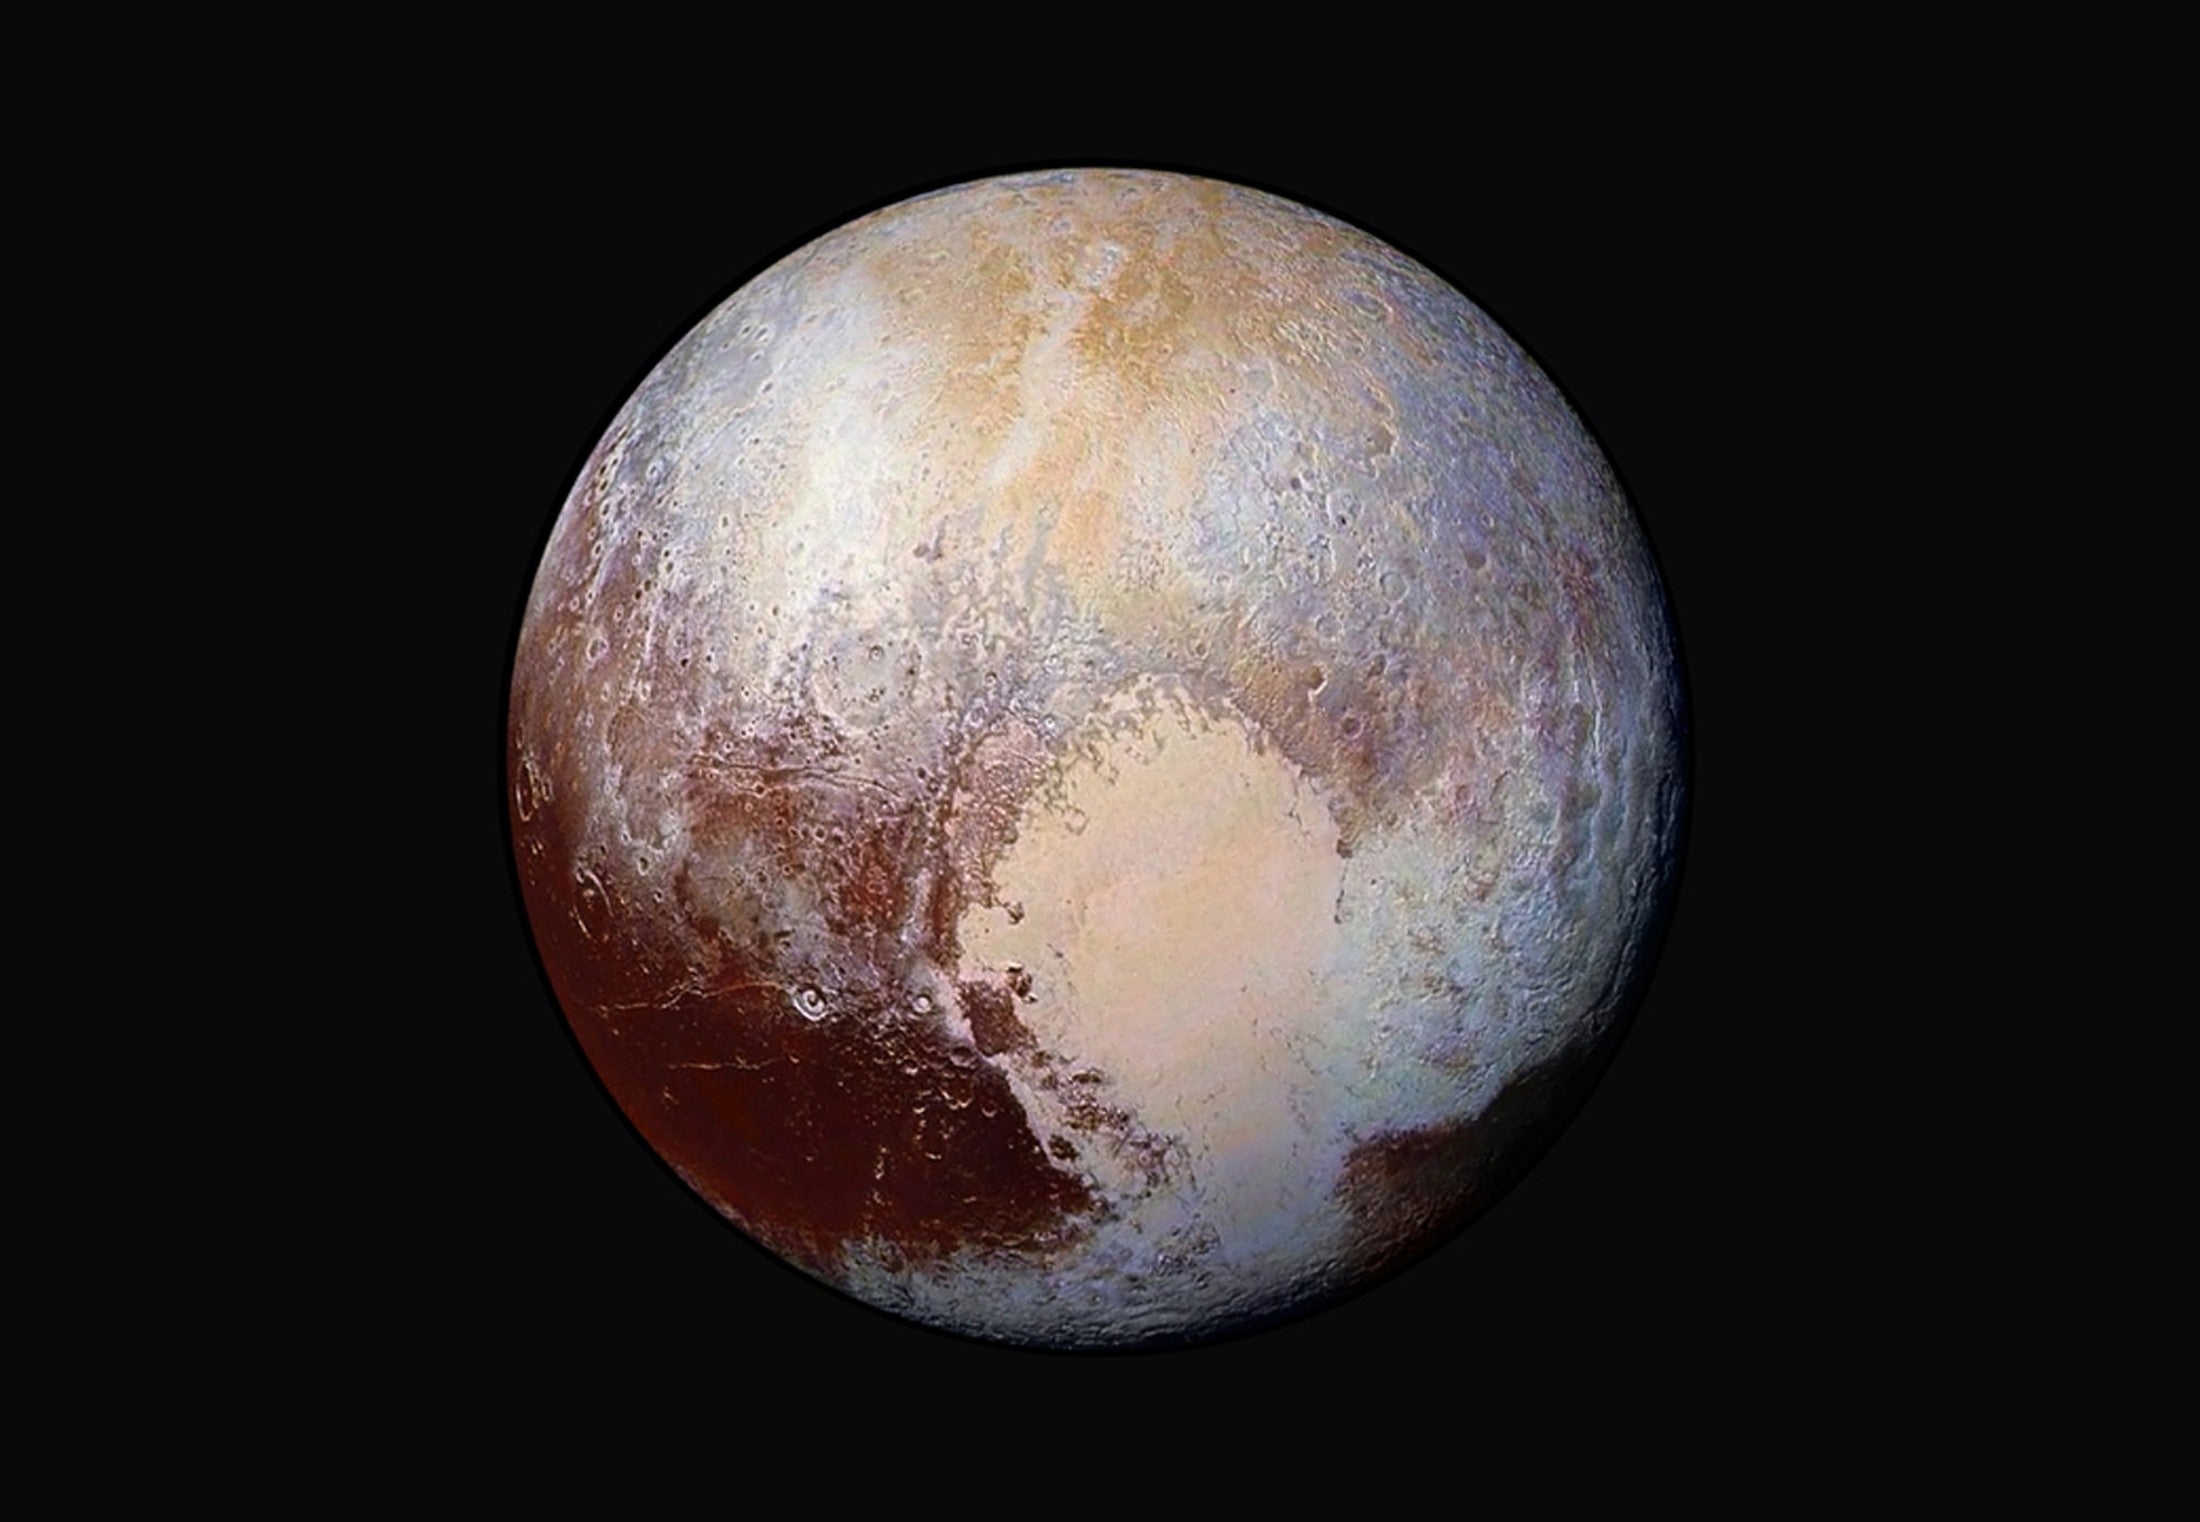 NASA's photo of Pluto